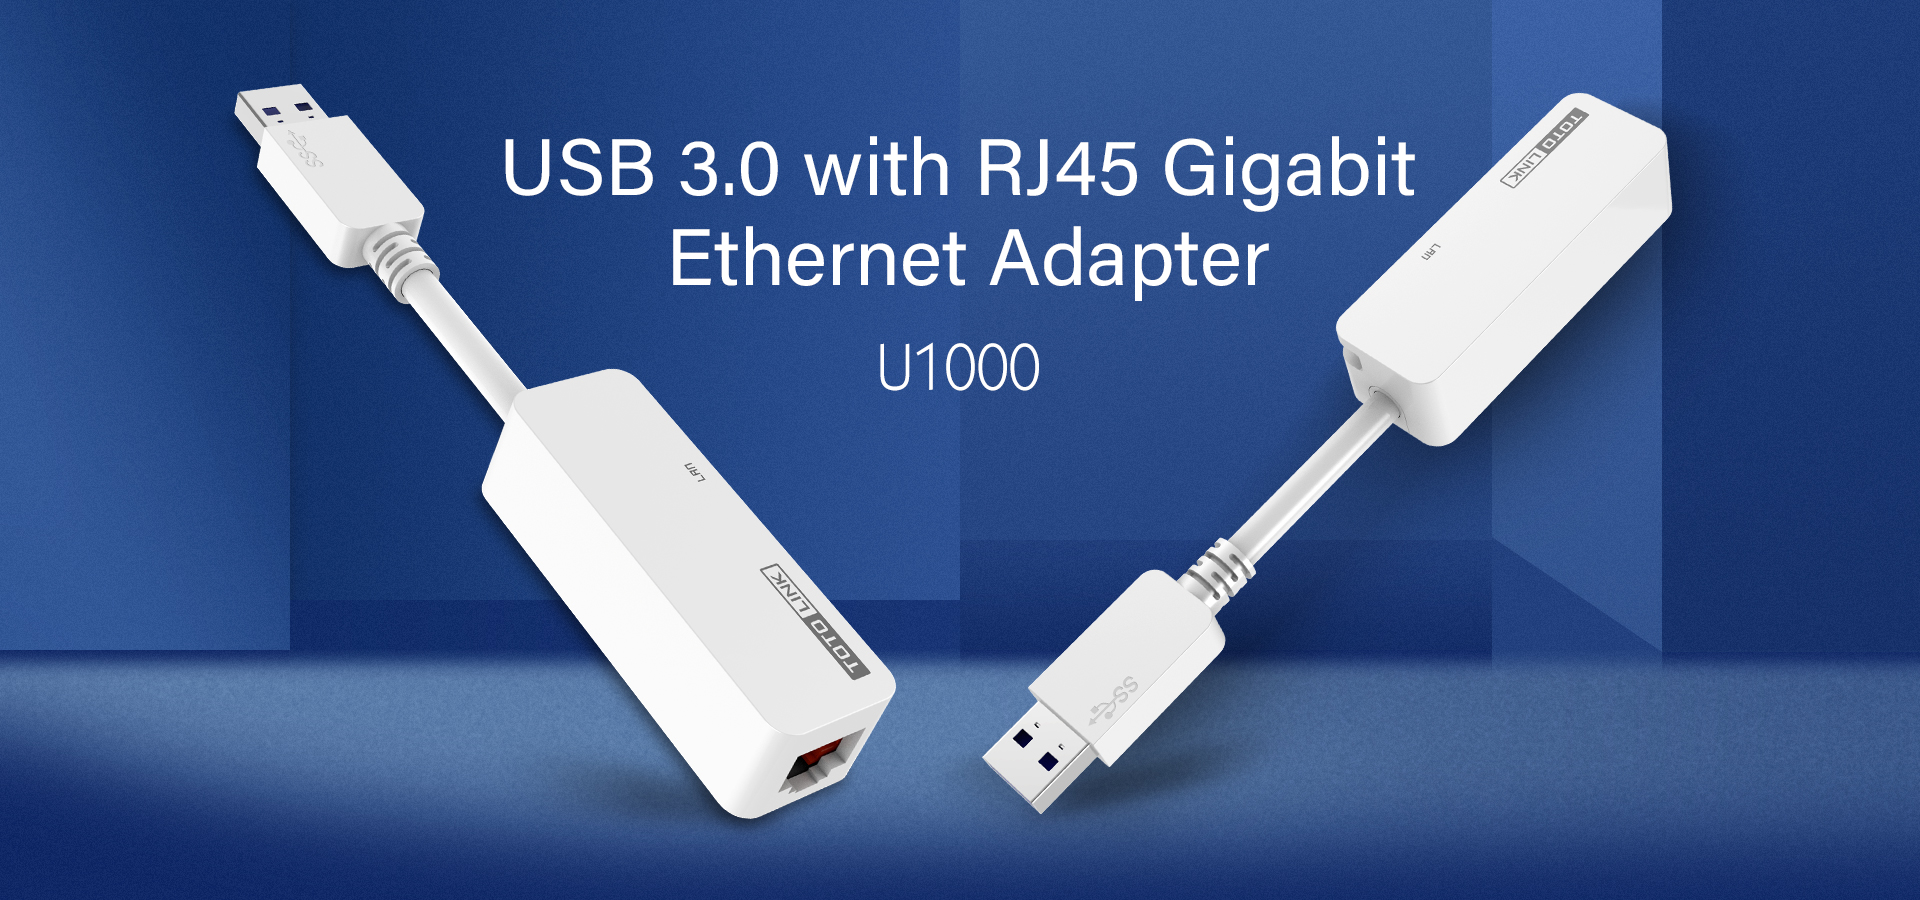 U1000-USB-3-0-with-RJ45-Gigabit-Ethernet-Adapter